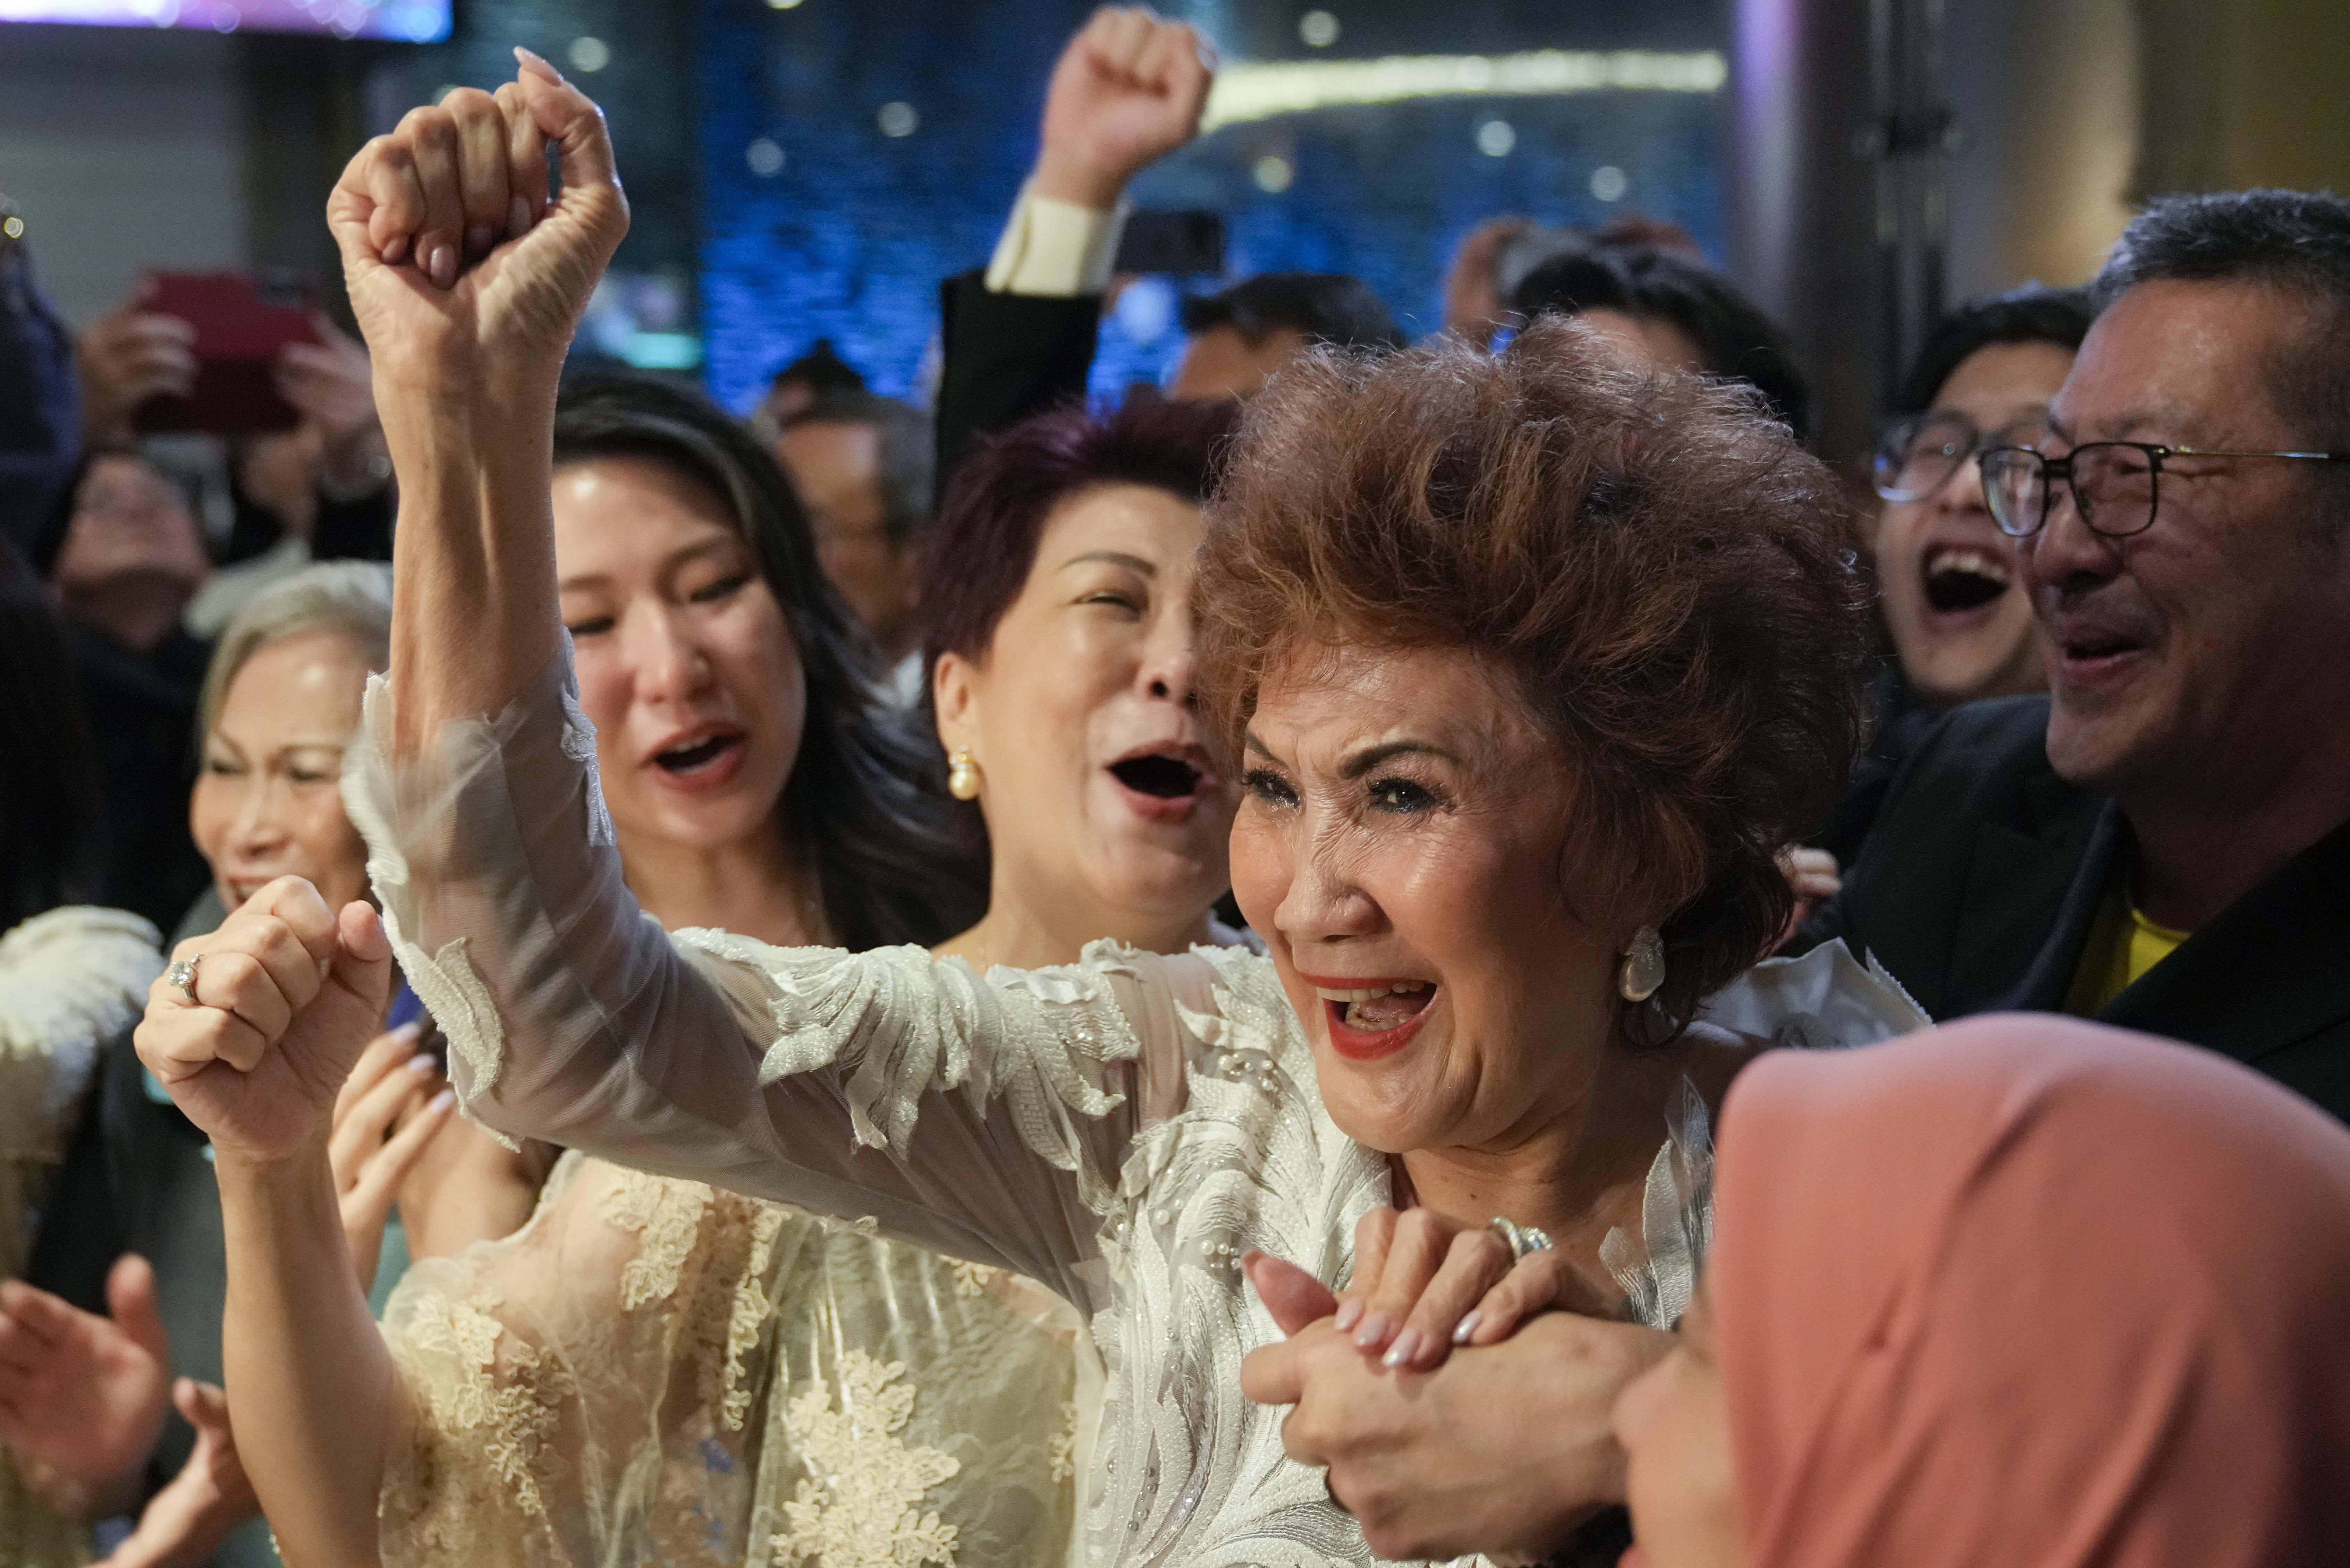 Woman cheering at party.